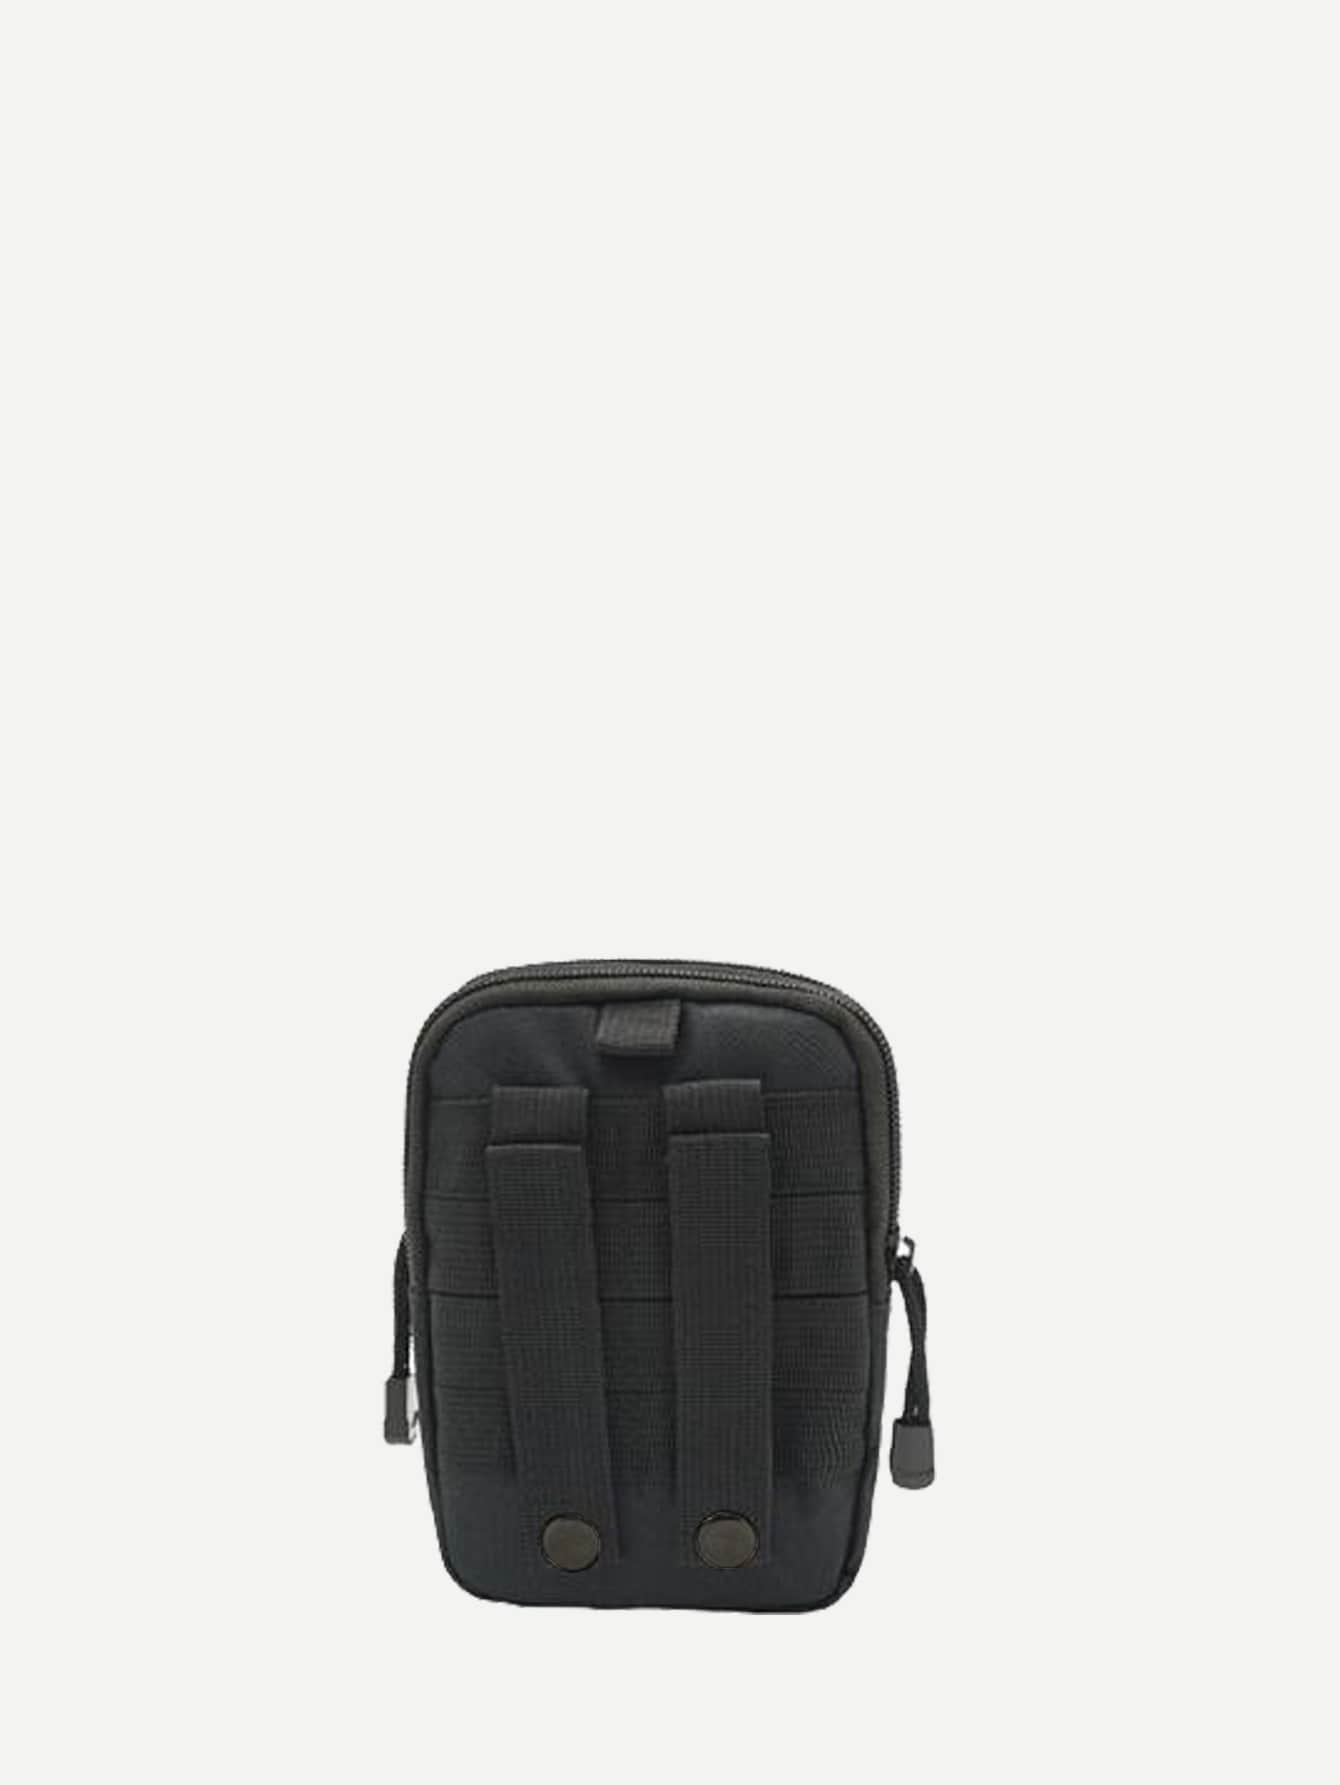 Canvas Black Multi Functional Clutch Bag